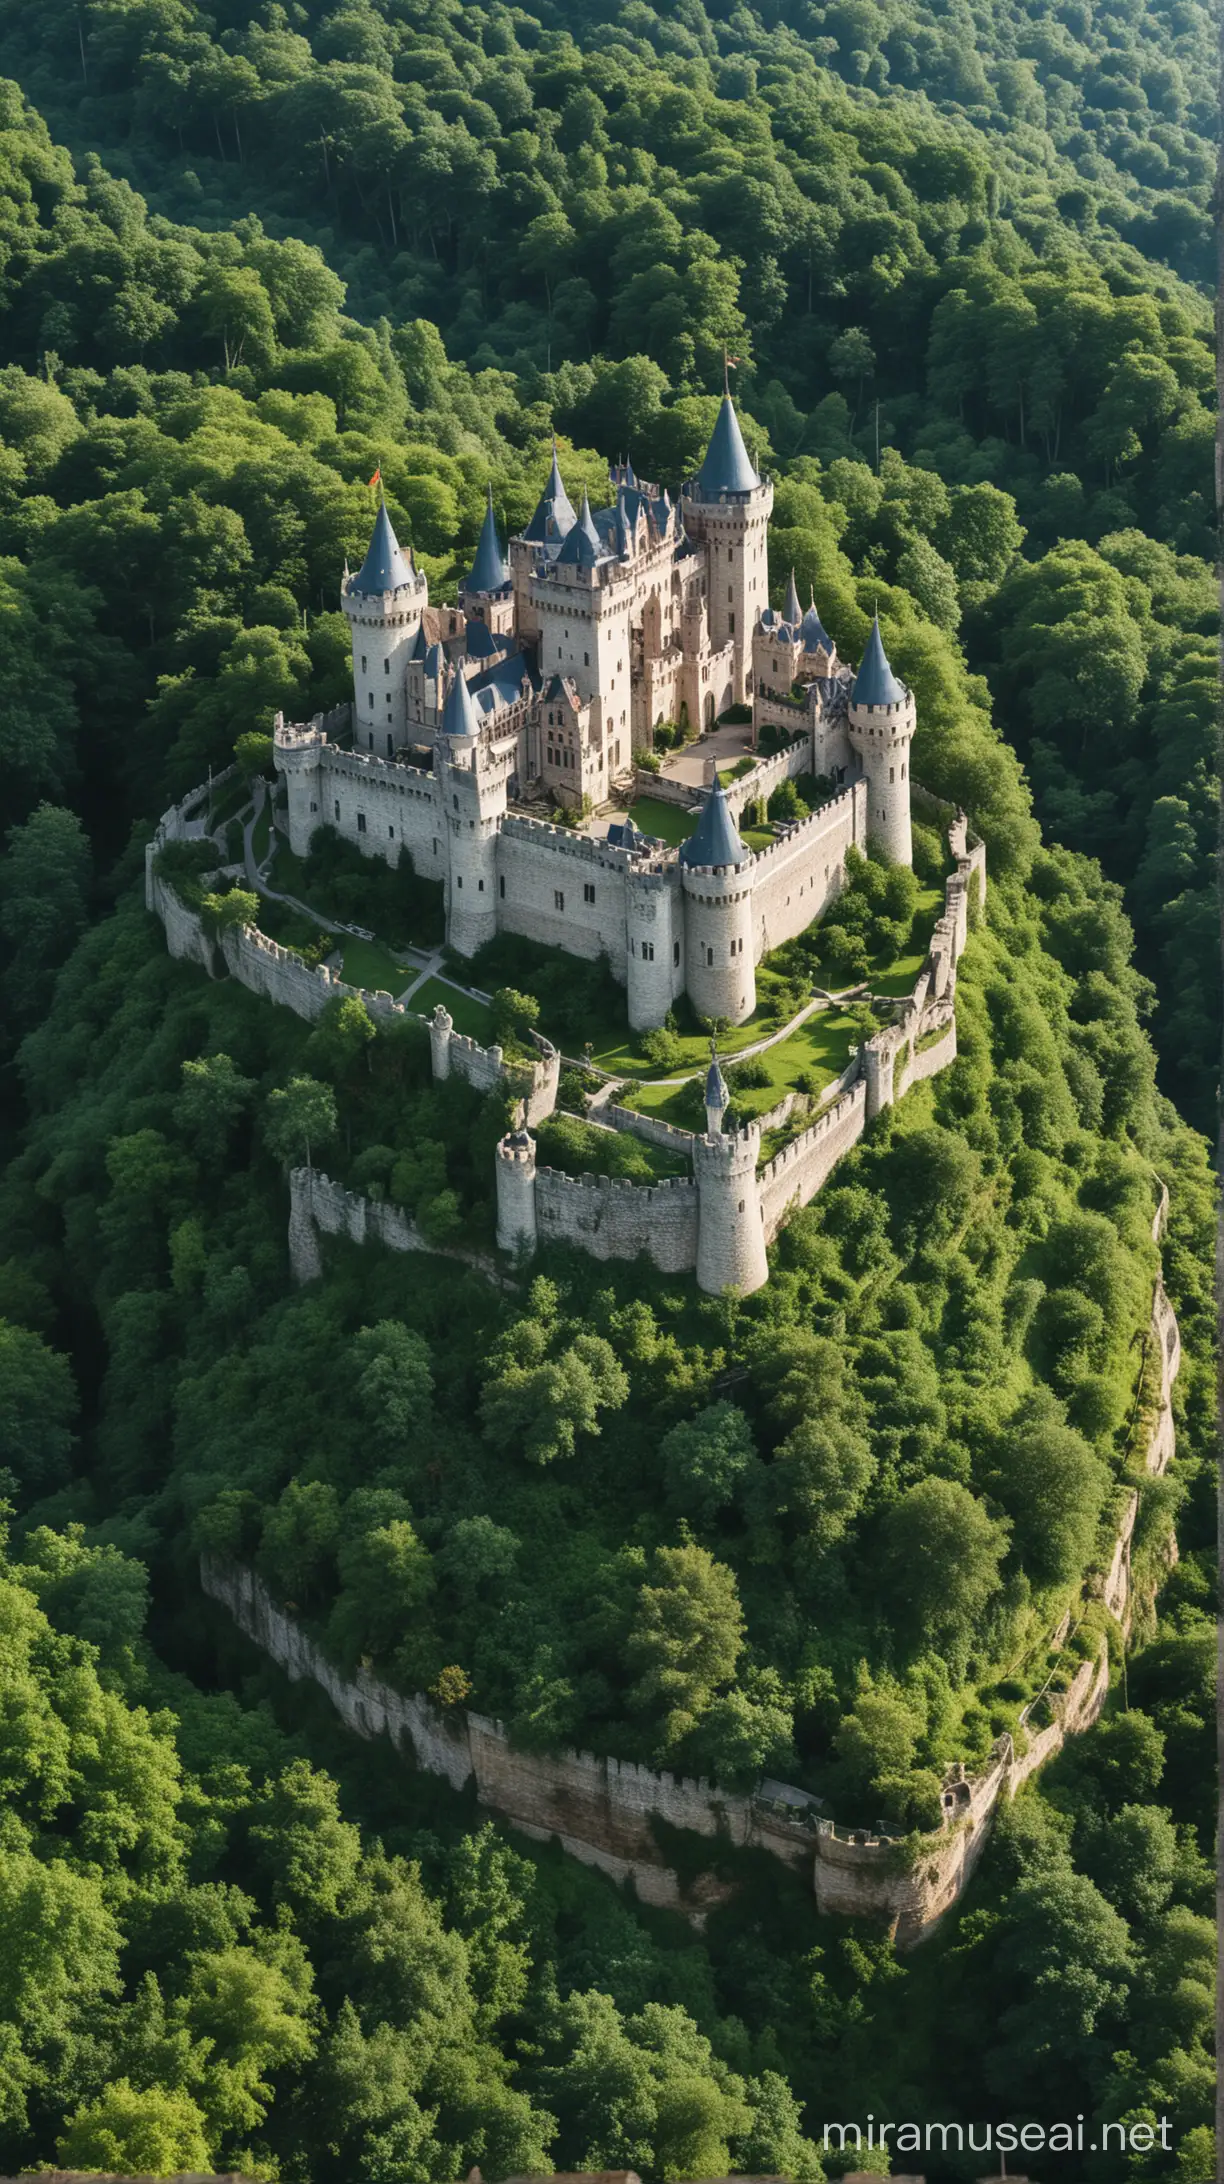 Majestic Old Castle Amidst Lush Green Kingdom